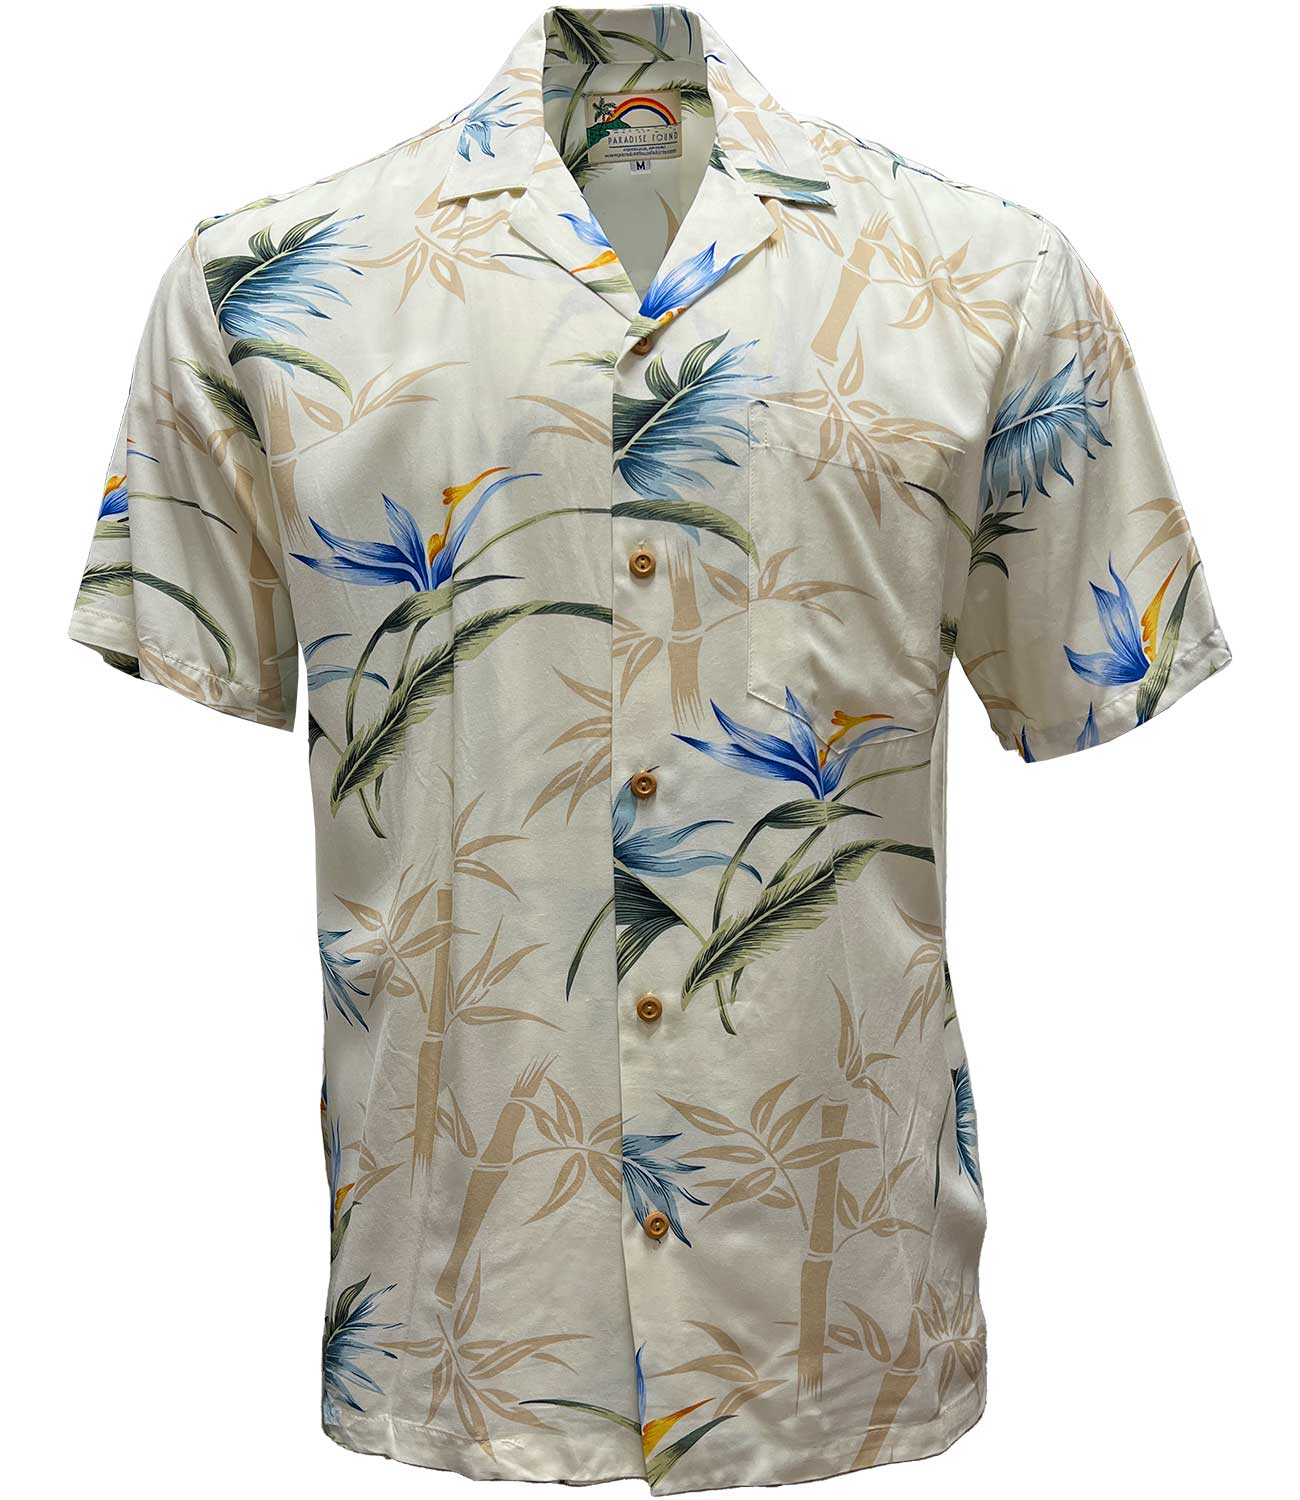 Here's Where to Buy an Authentic Hawaiian Shirt